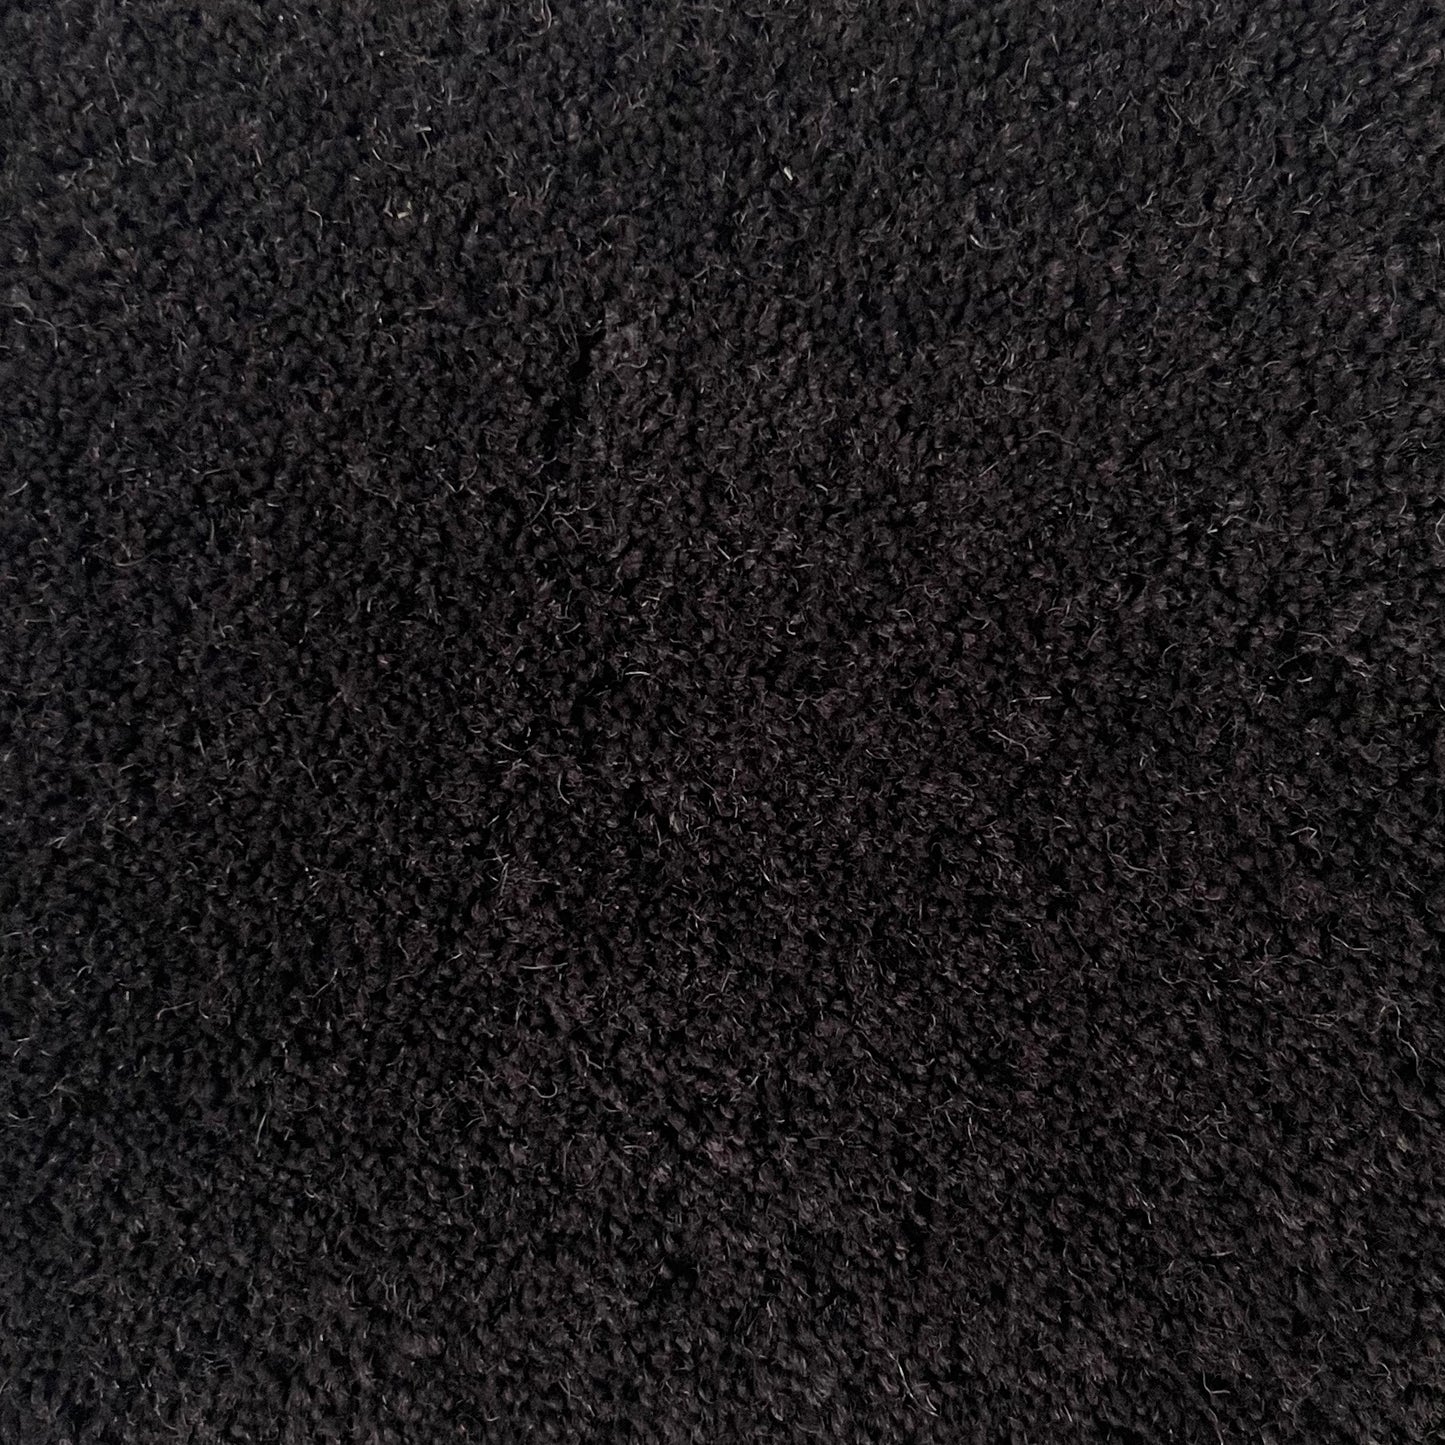 100% New Zealand Wool Rug Swatch in Dark Grey